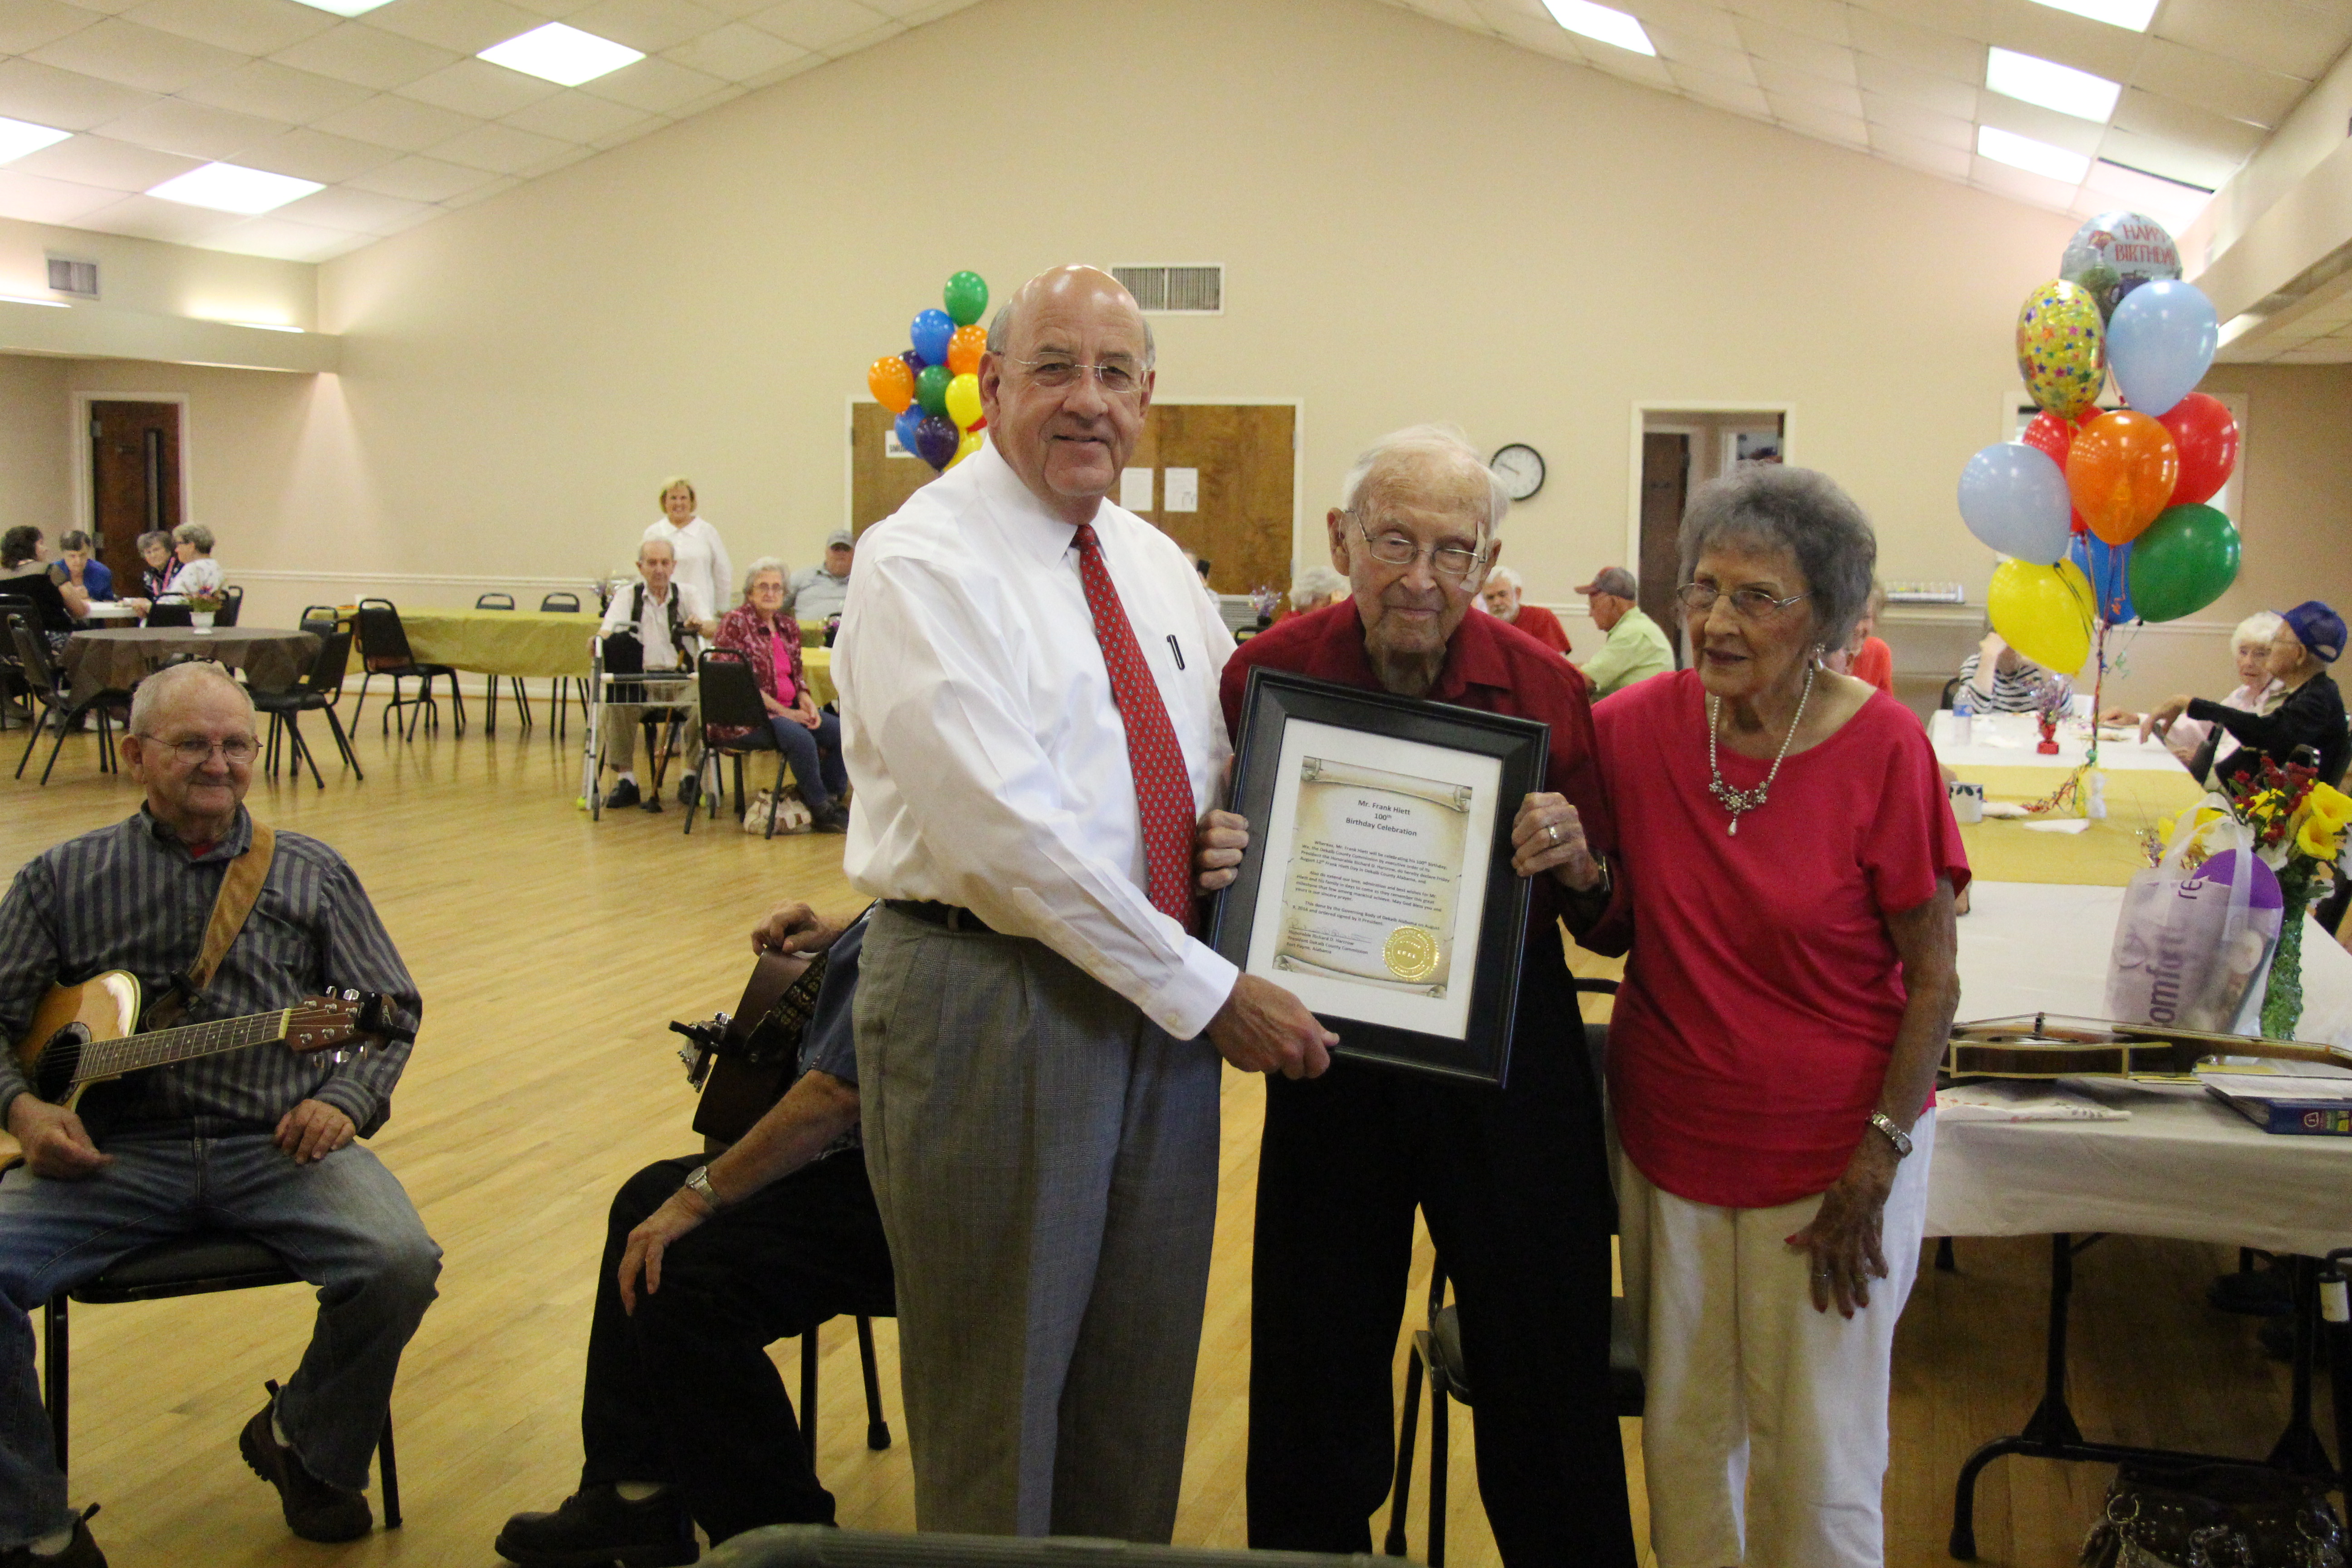 Frank Hiett Celebrates 100th Birthday in Rainsville